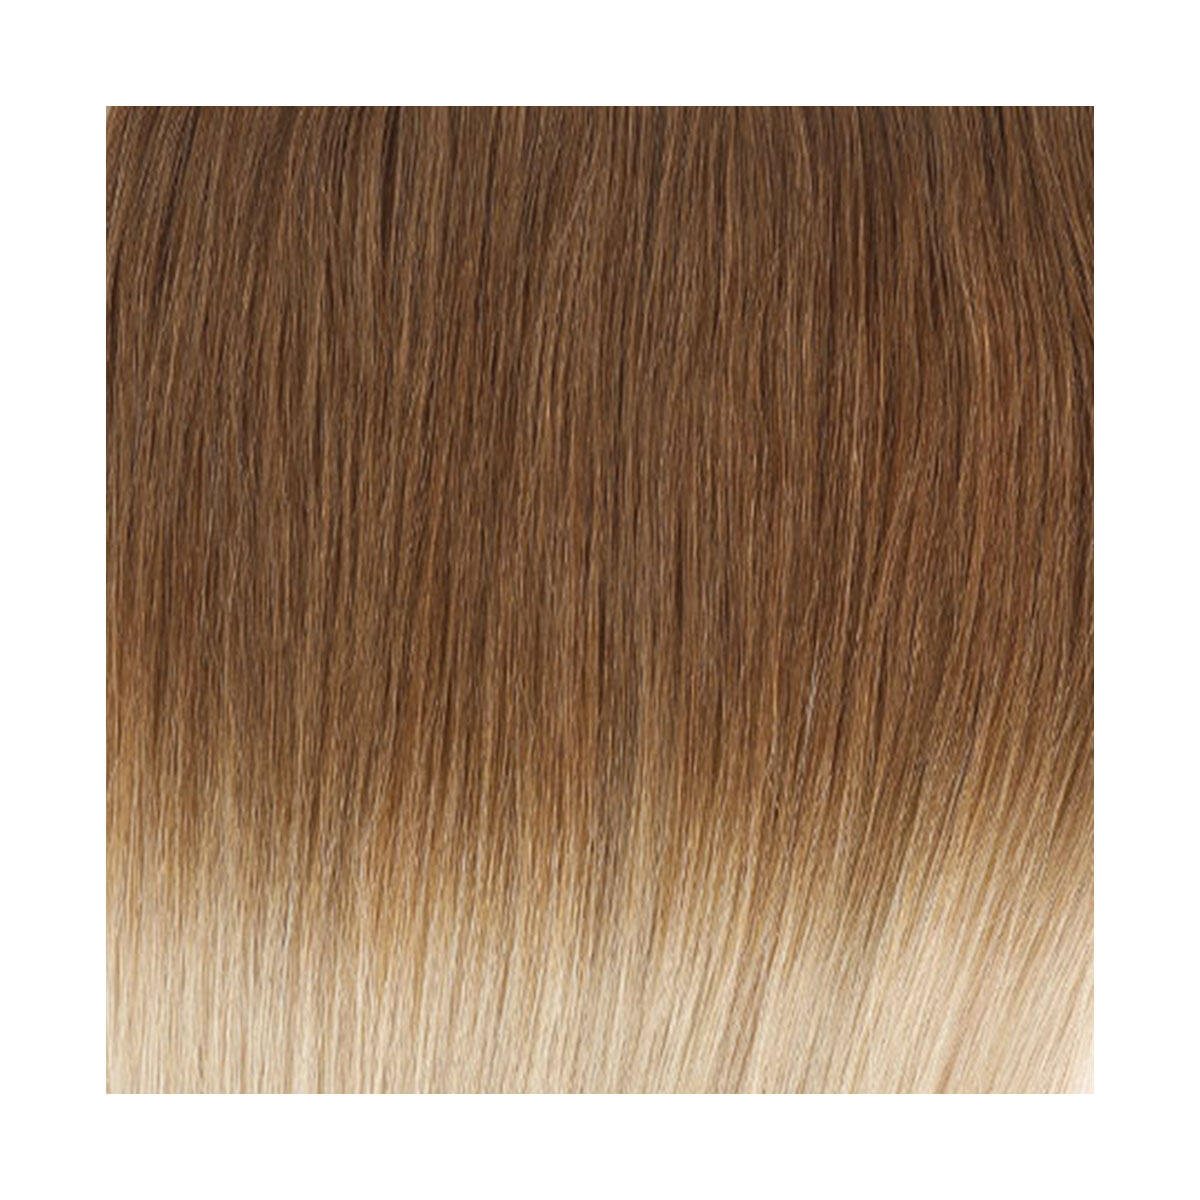 Colour Sample O5.1/10.8 Medium Ash Blond Ombre 20 cm